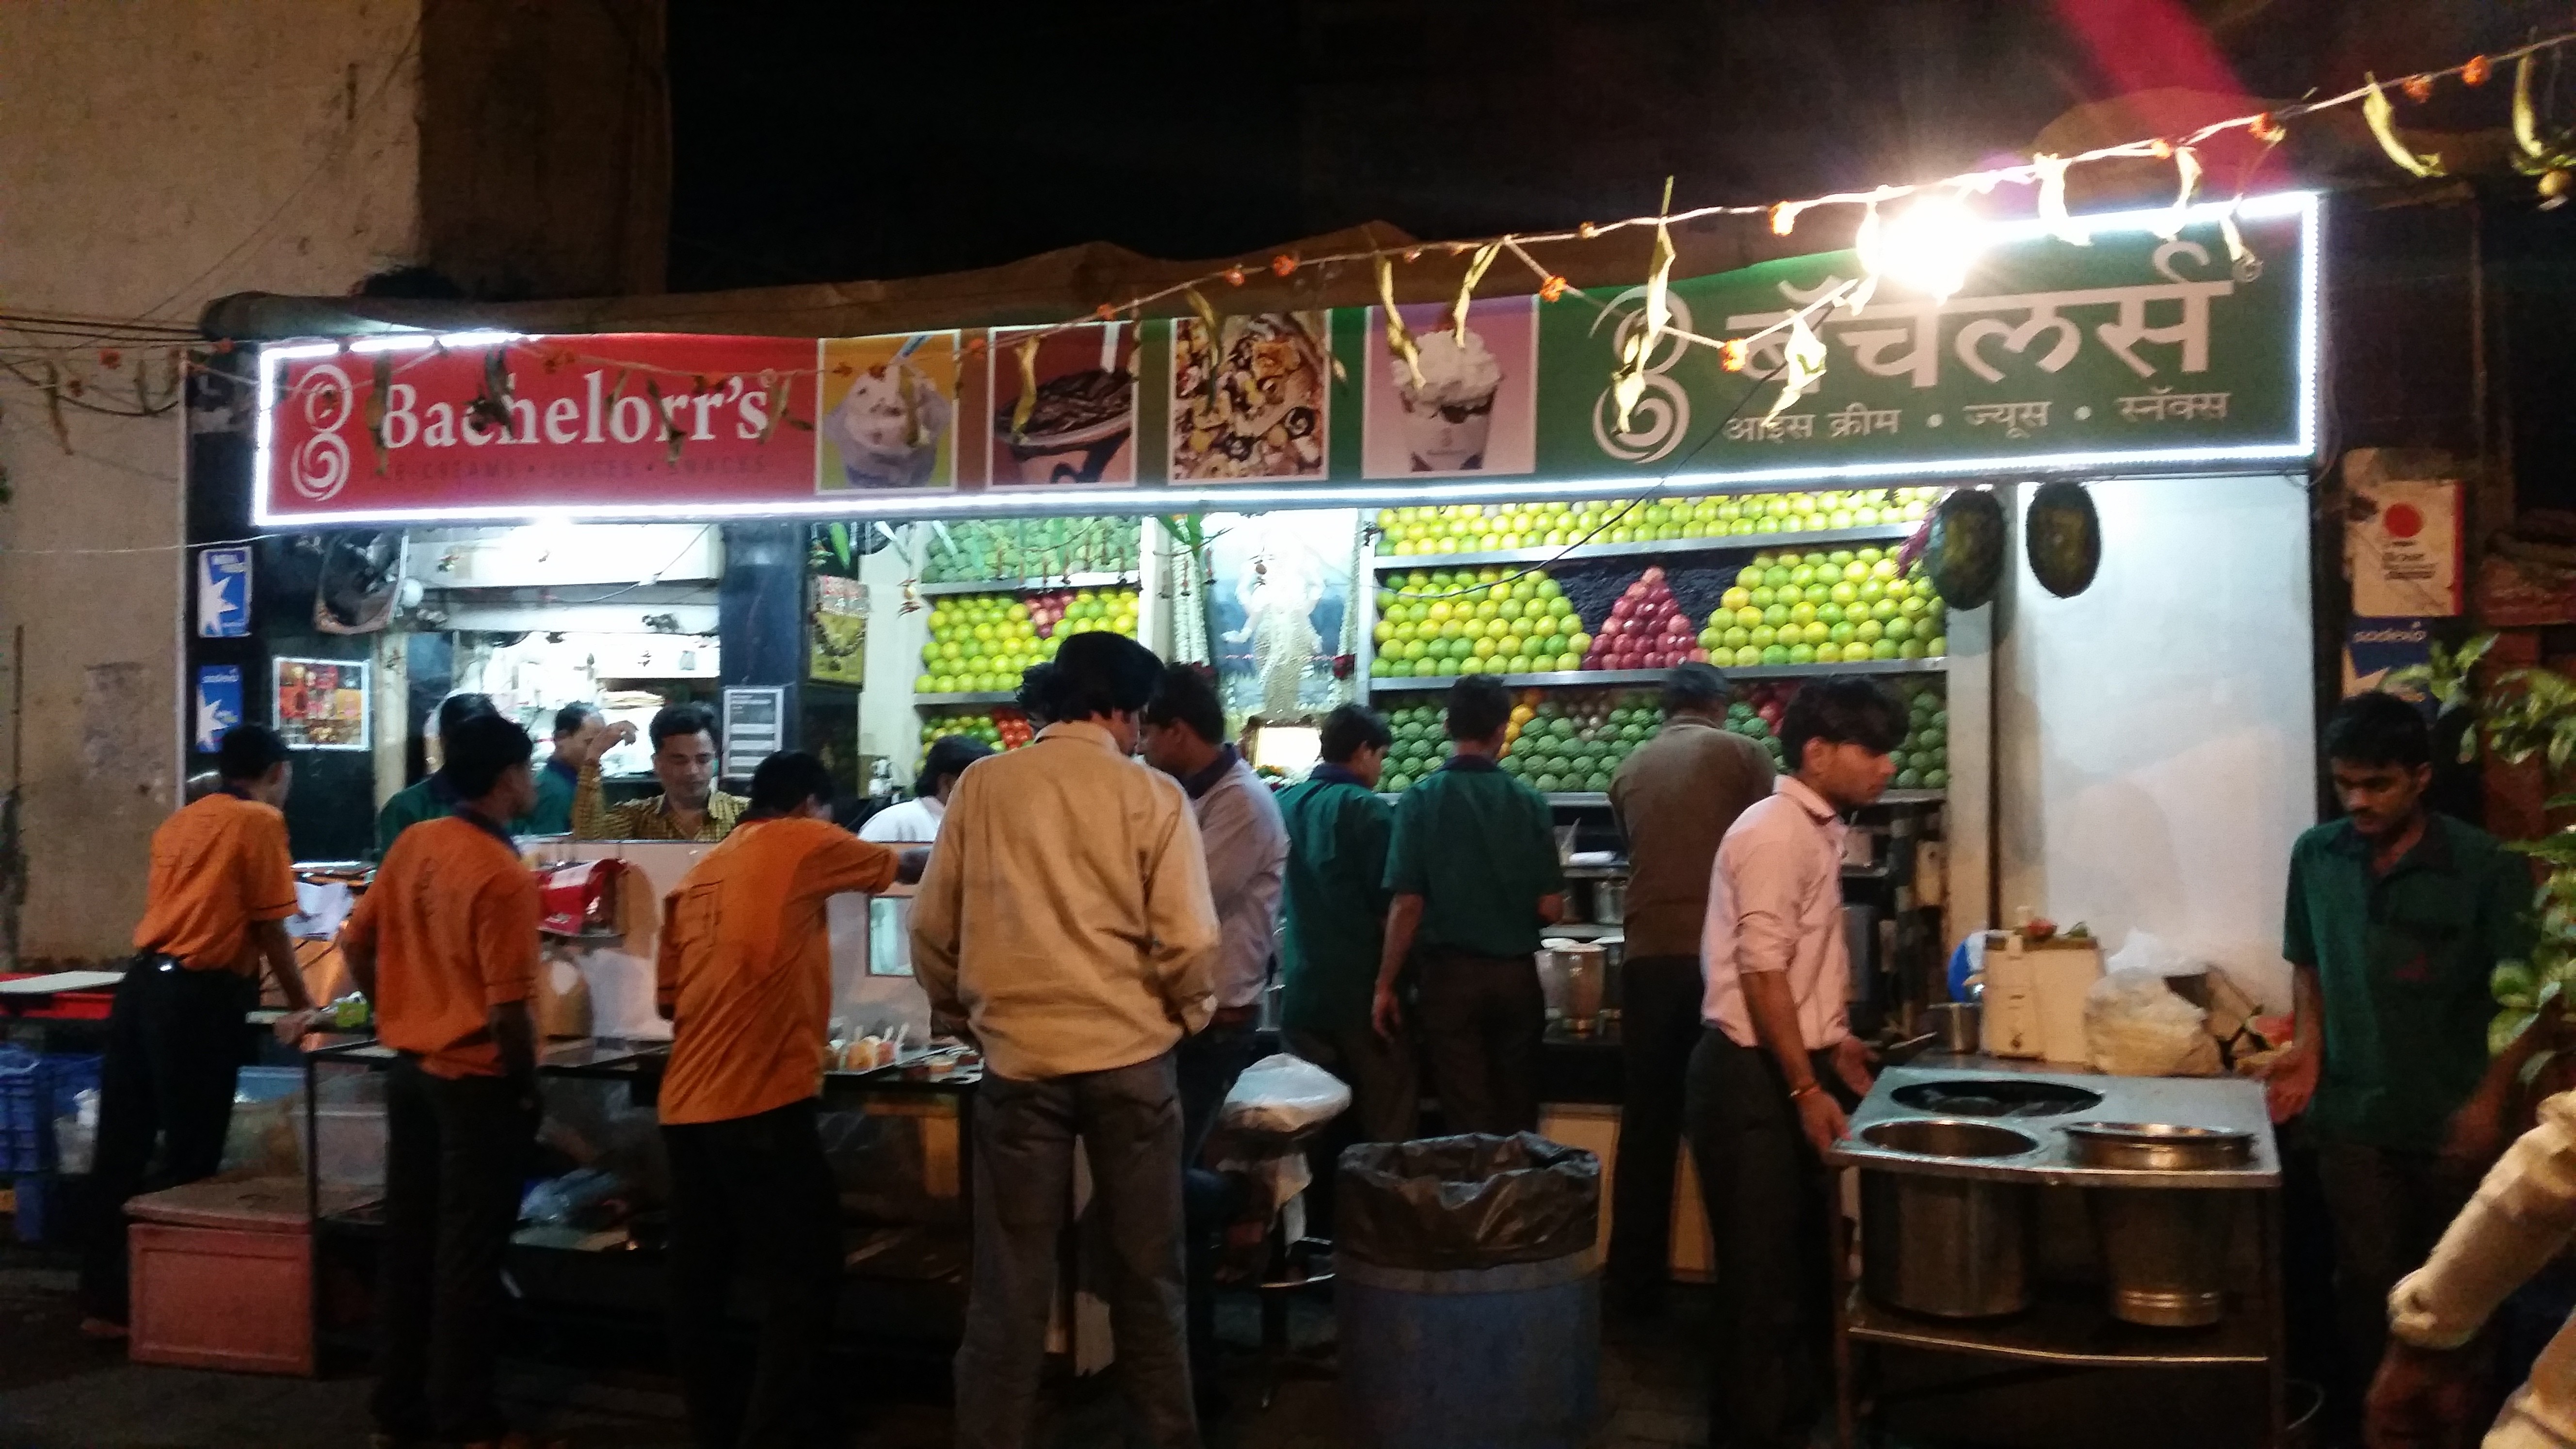 10 best street foods in Mumbai, Bachelors Mumbai